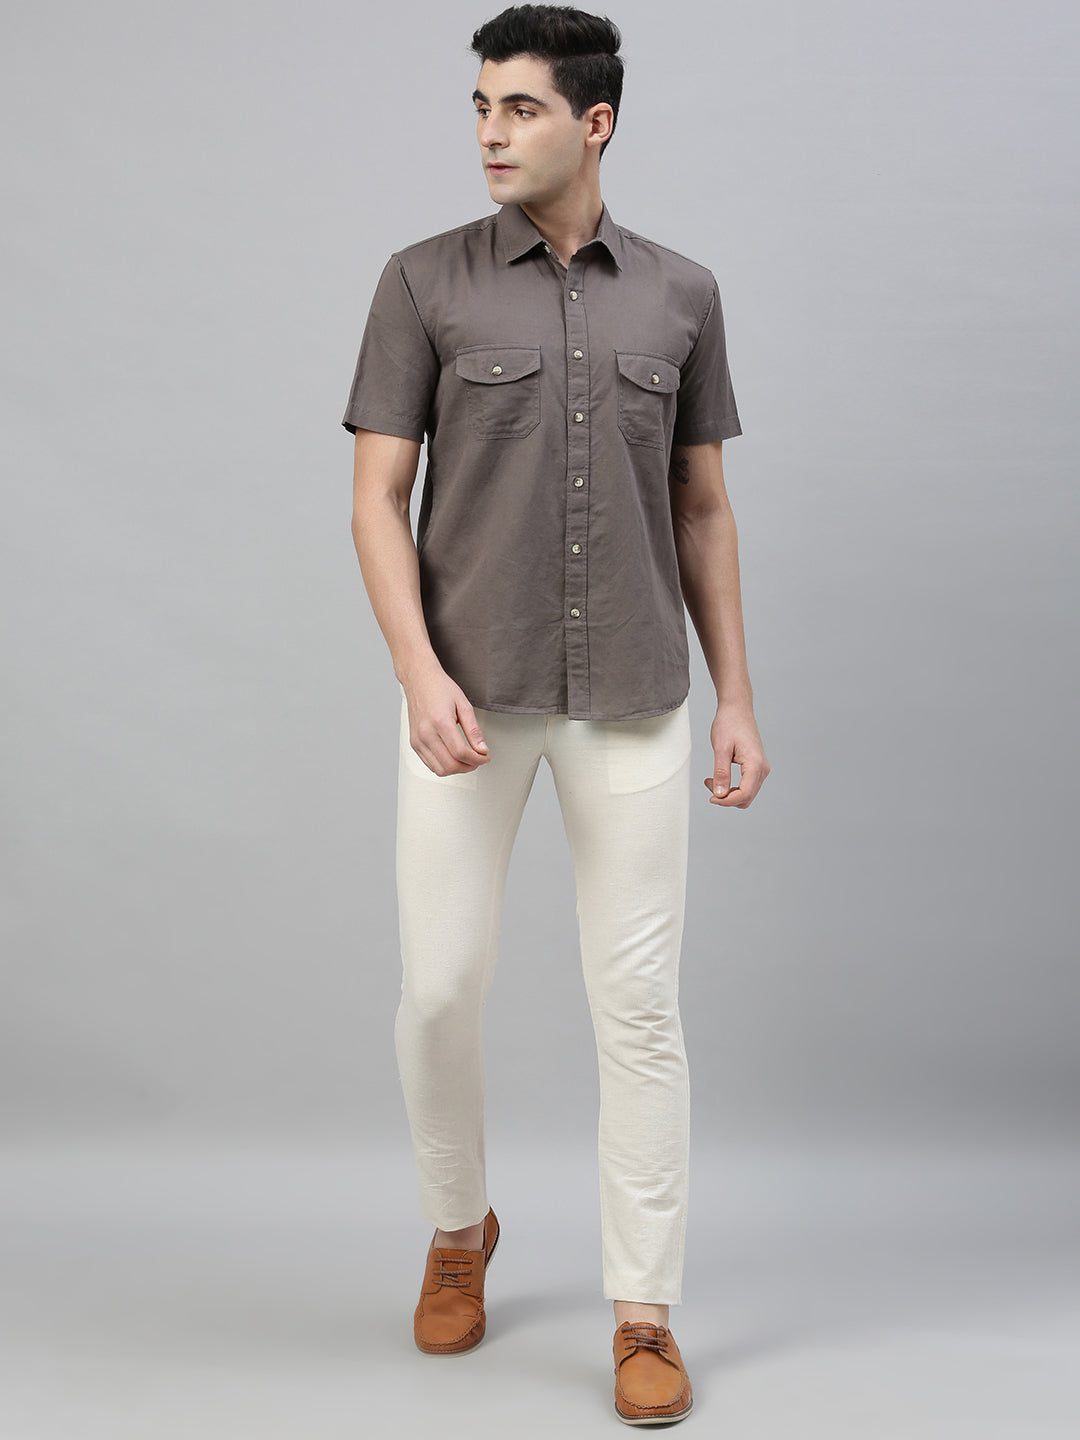 cottonworld Casual Wear Men's Olive Linen Cotton 2 Pocket Roll Up Slim Fit  Shirt, Size: Large